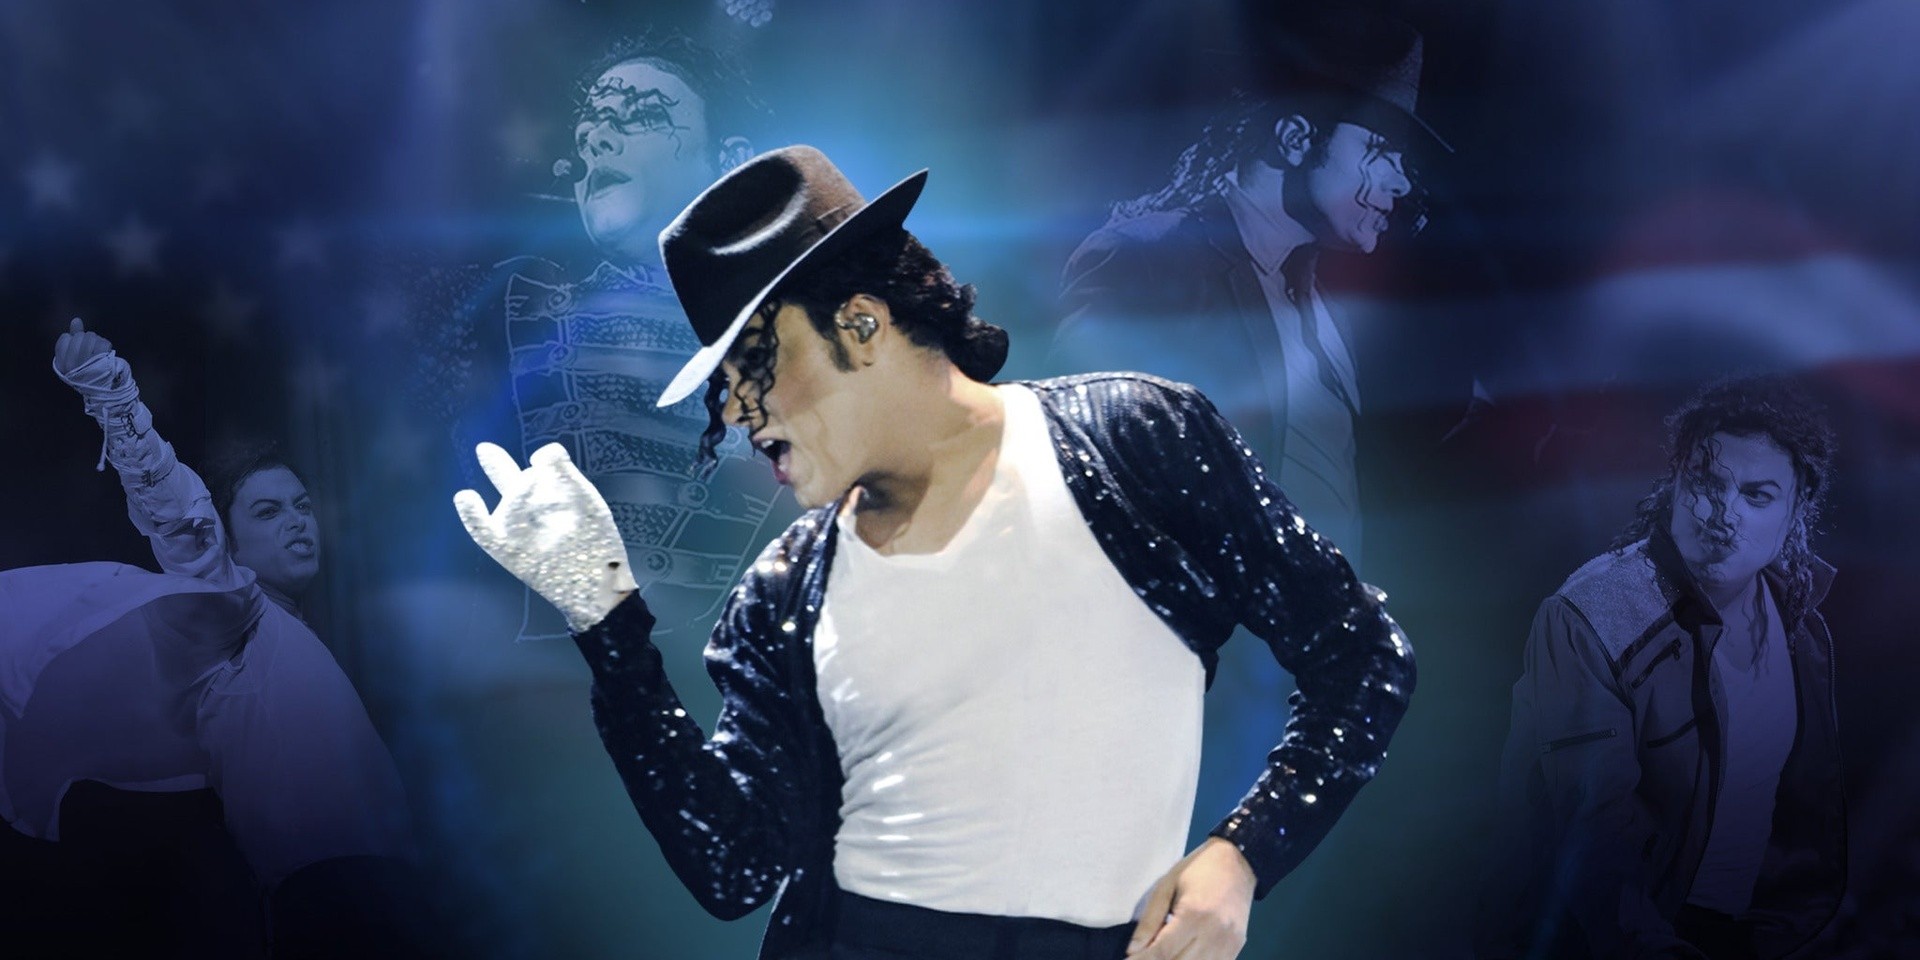 Michael Jackson impersonator Rodrigo Teaser to perform tribute show in Singapore this September